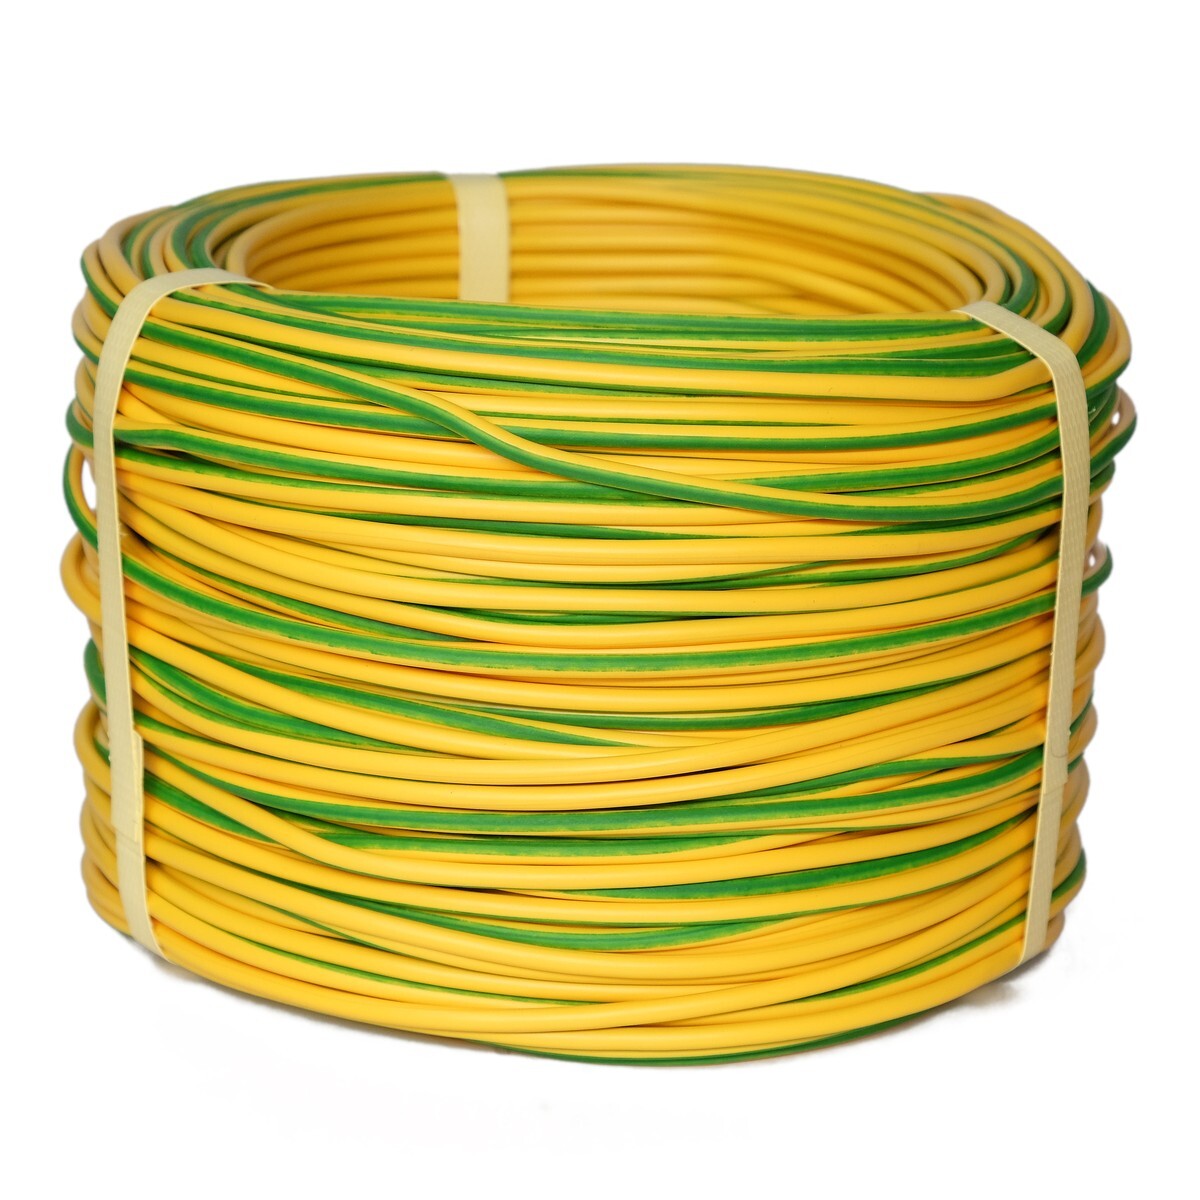 ПУГВ 1х2.5 желто-зеленый. Провод ПВ-3 2,5 (желто-зеленый). Провод ПУГВ 1х25 зелено-желтый ту 16-705.501-2010. ПУГВ 2,5 желтый. Купить кабель в брянске